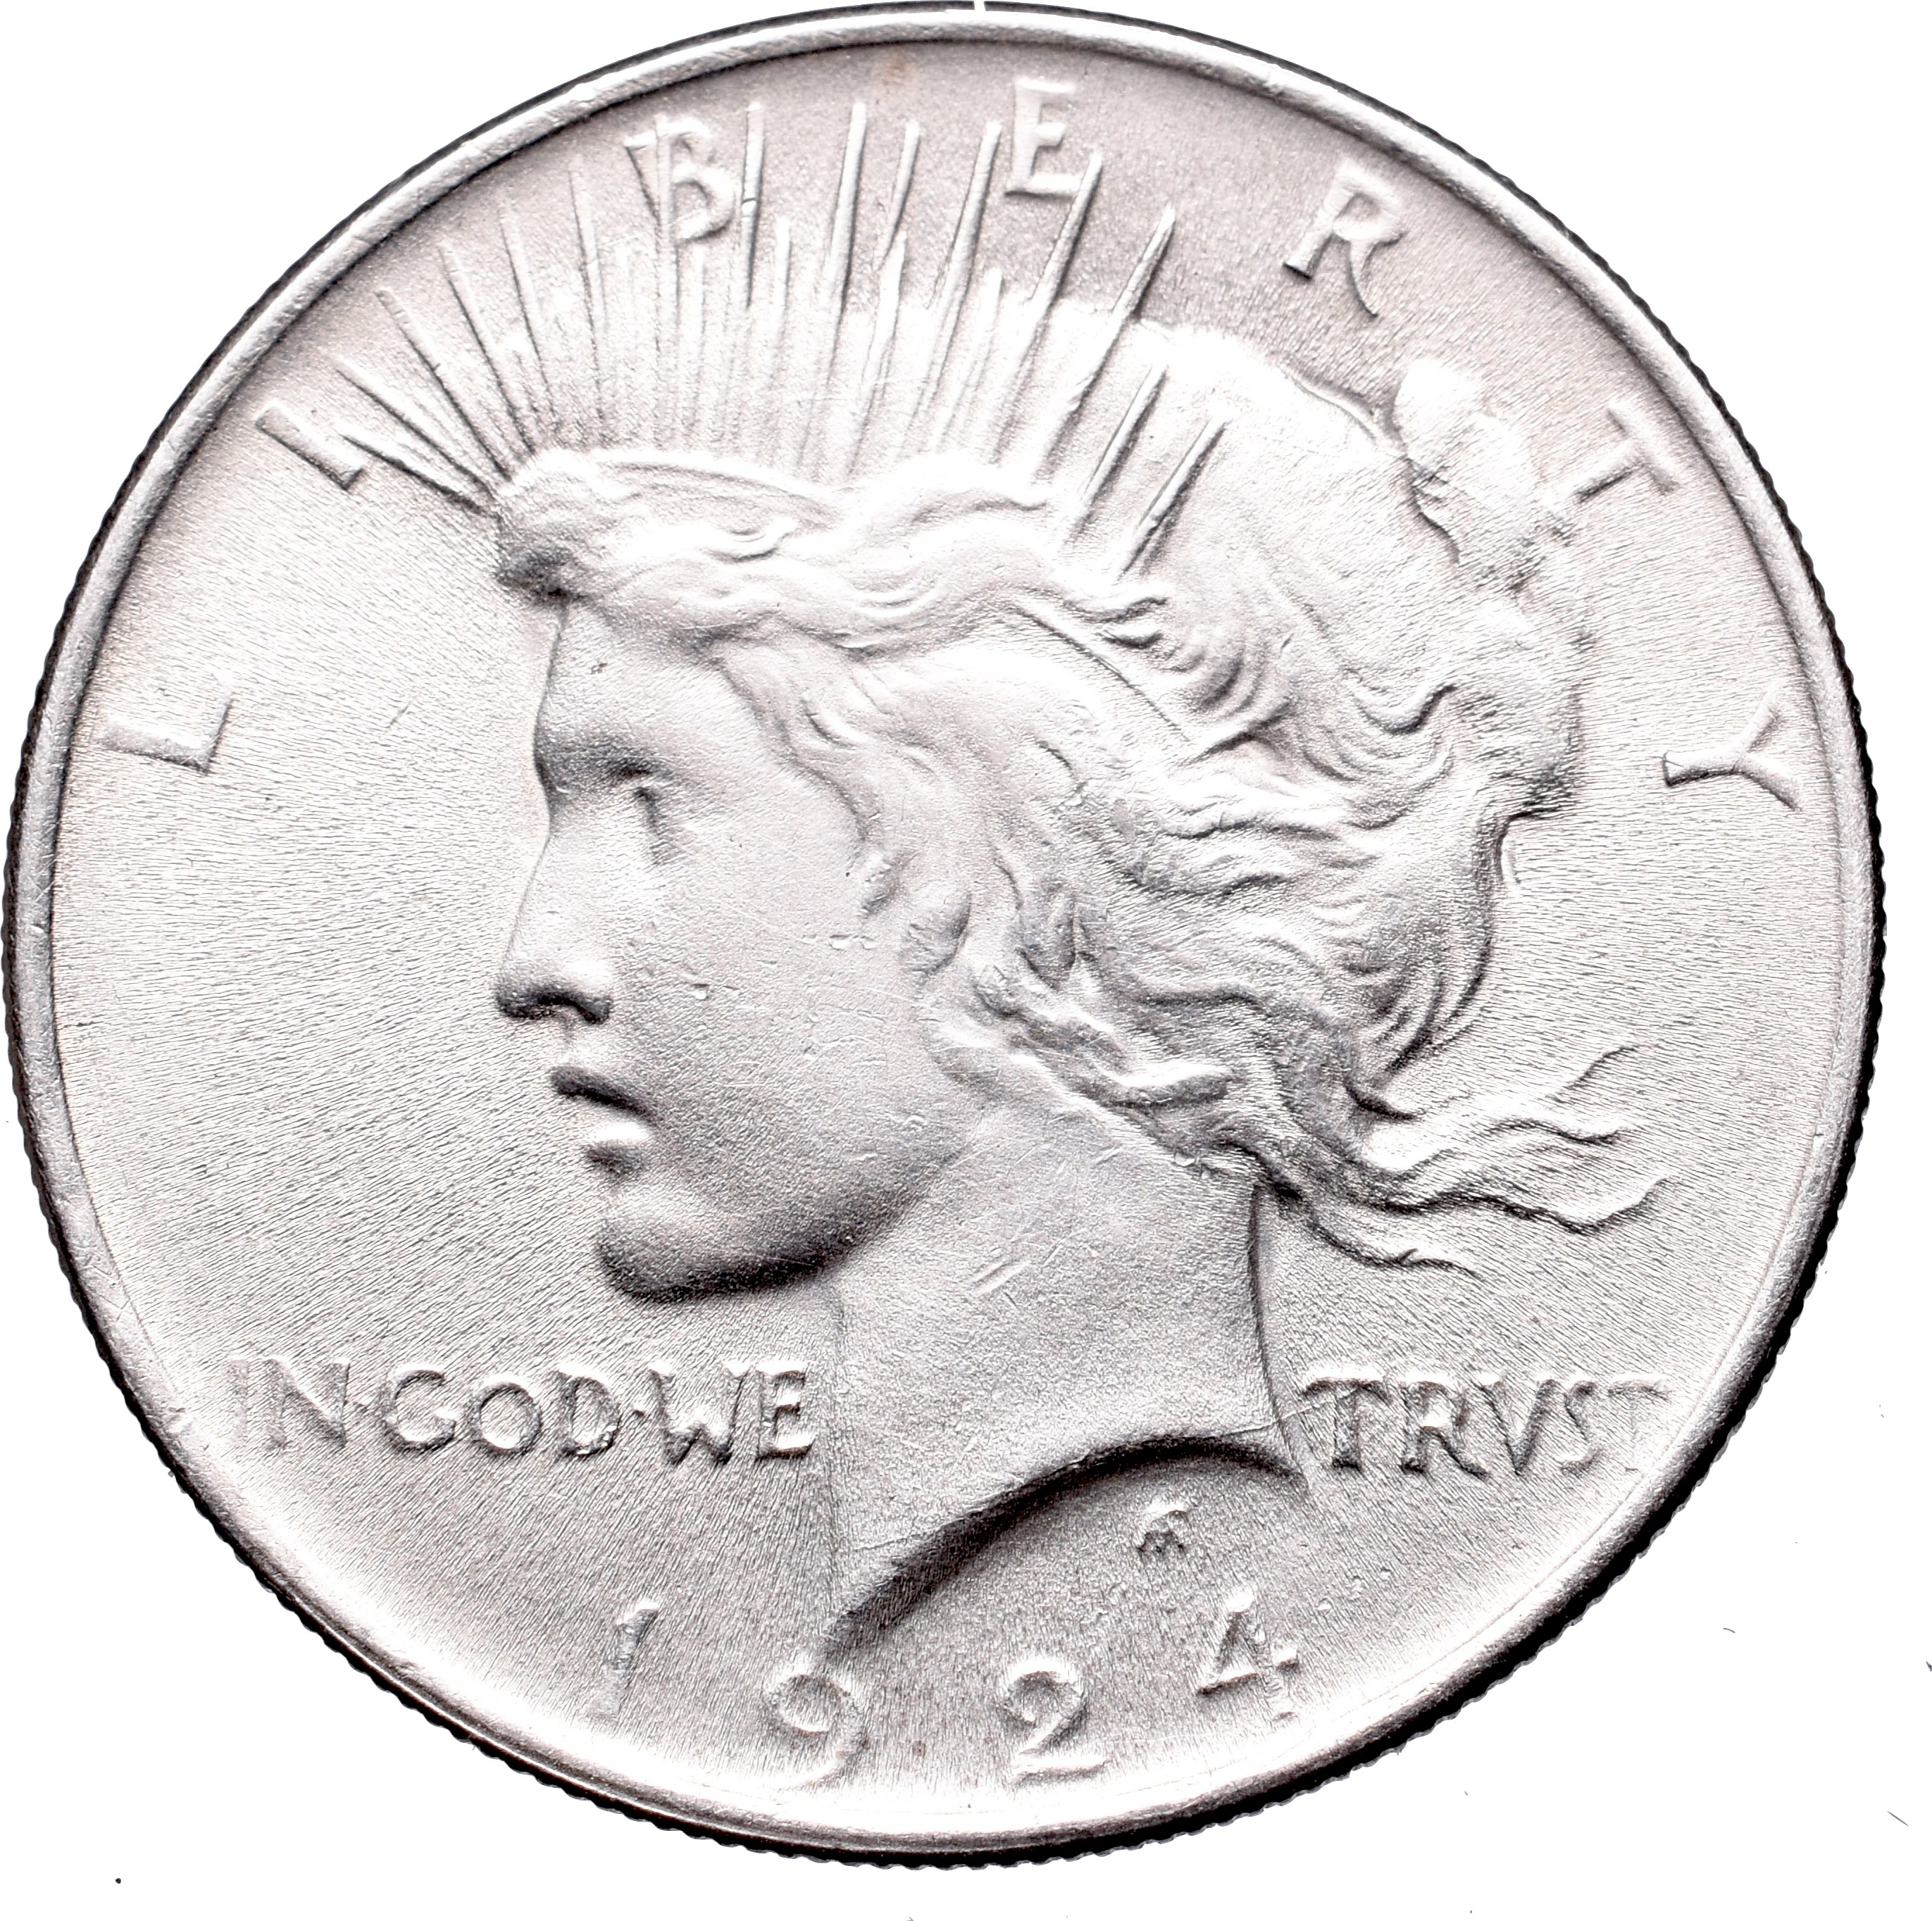 1 доллар монета серебро. 1 Доллар США серебро. Монета “доллар Моргана”. Монета 1 доллар 1922 г Моргана. Американские серебряные монеты.